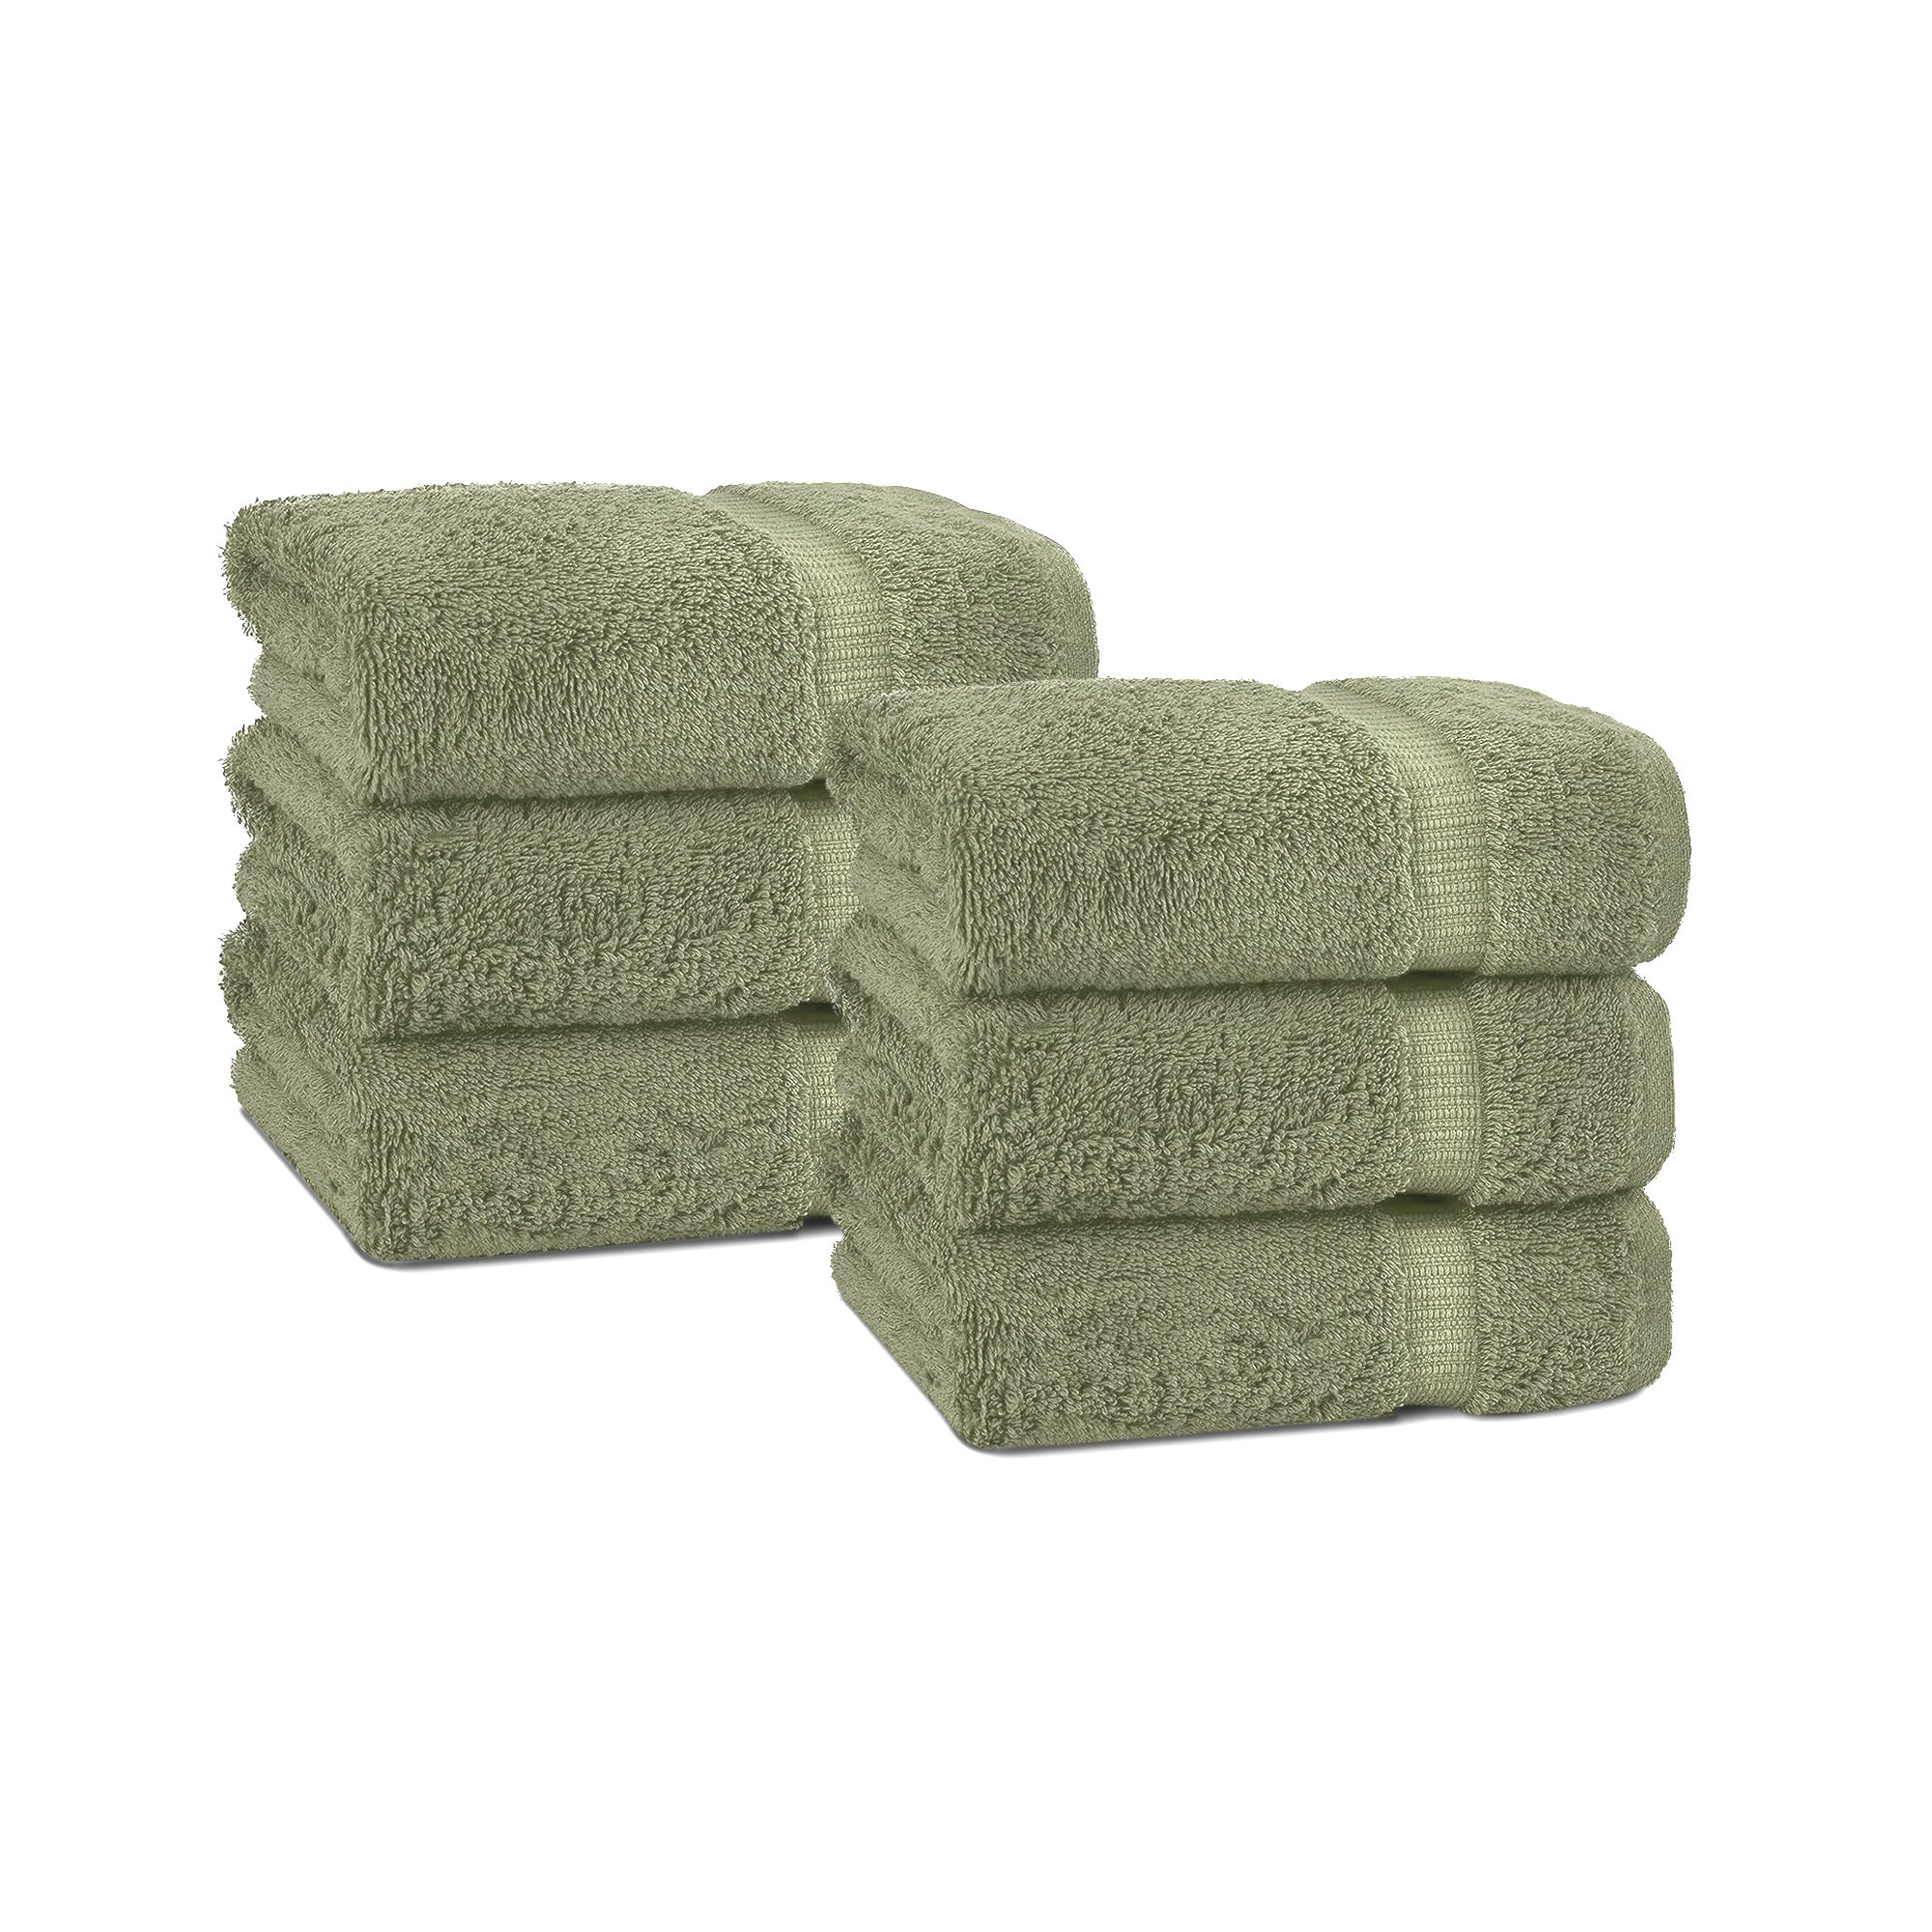 Economy Towel Set, 126 Towels, Bath Towels, Hand Towels, and